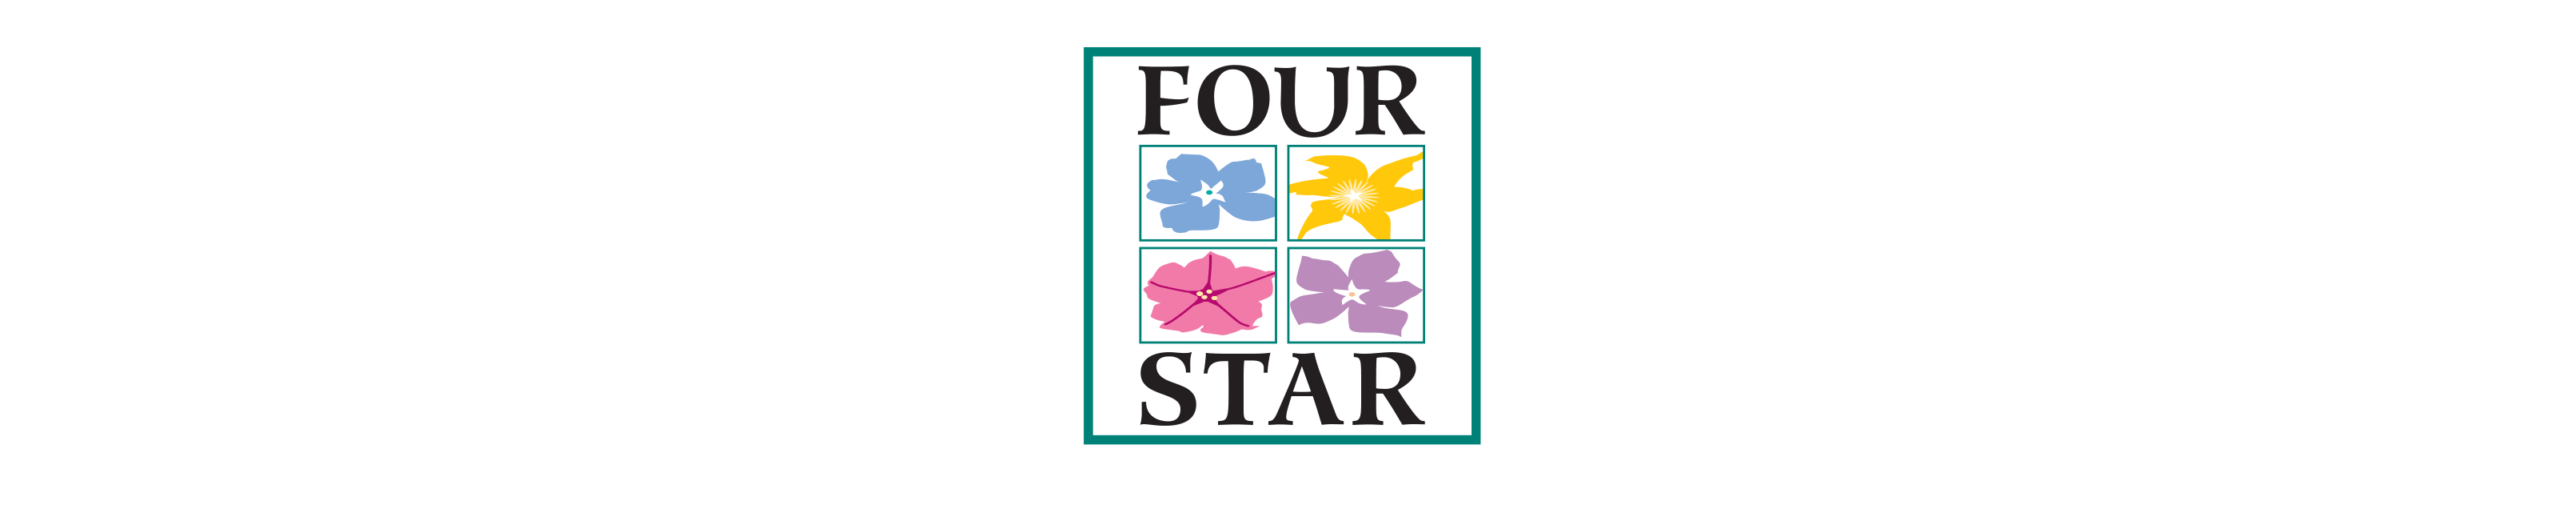 Four Star corporate logo